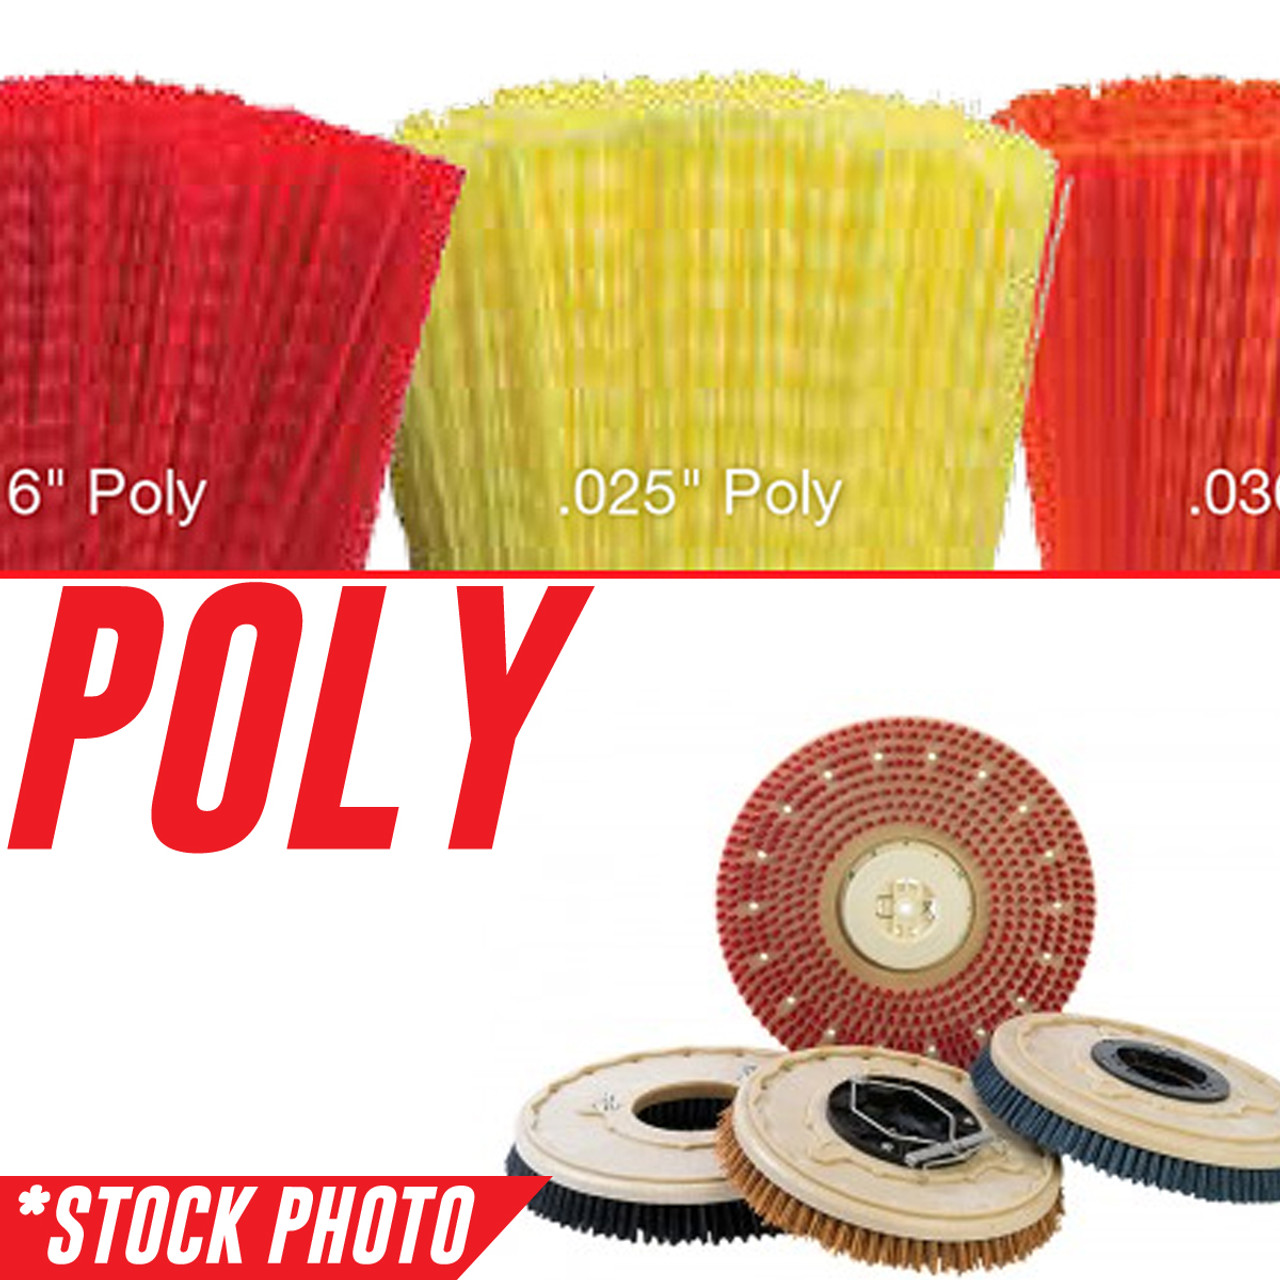 11427B, 7-08-03213-1: 14" Rotary Brush .028" Poly fits American-Lincoln Models 6200B, 6200S, 6200SS, 730i, 930i, Encore 28